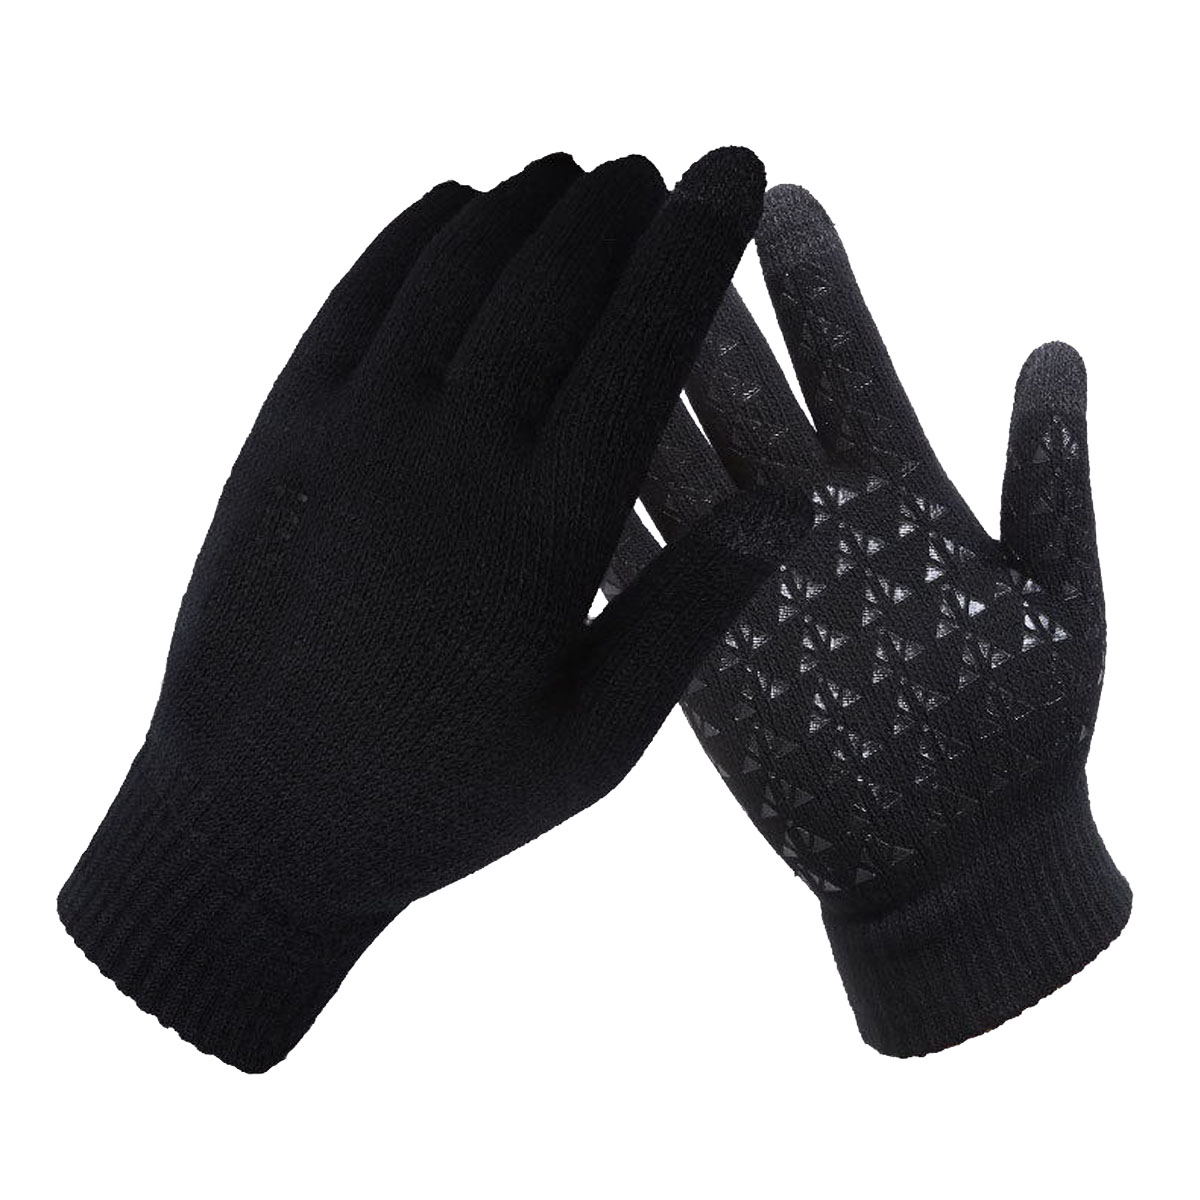 GL-MEZ1086 Non-slip Touch Screen Gloves